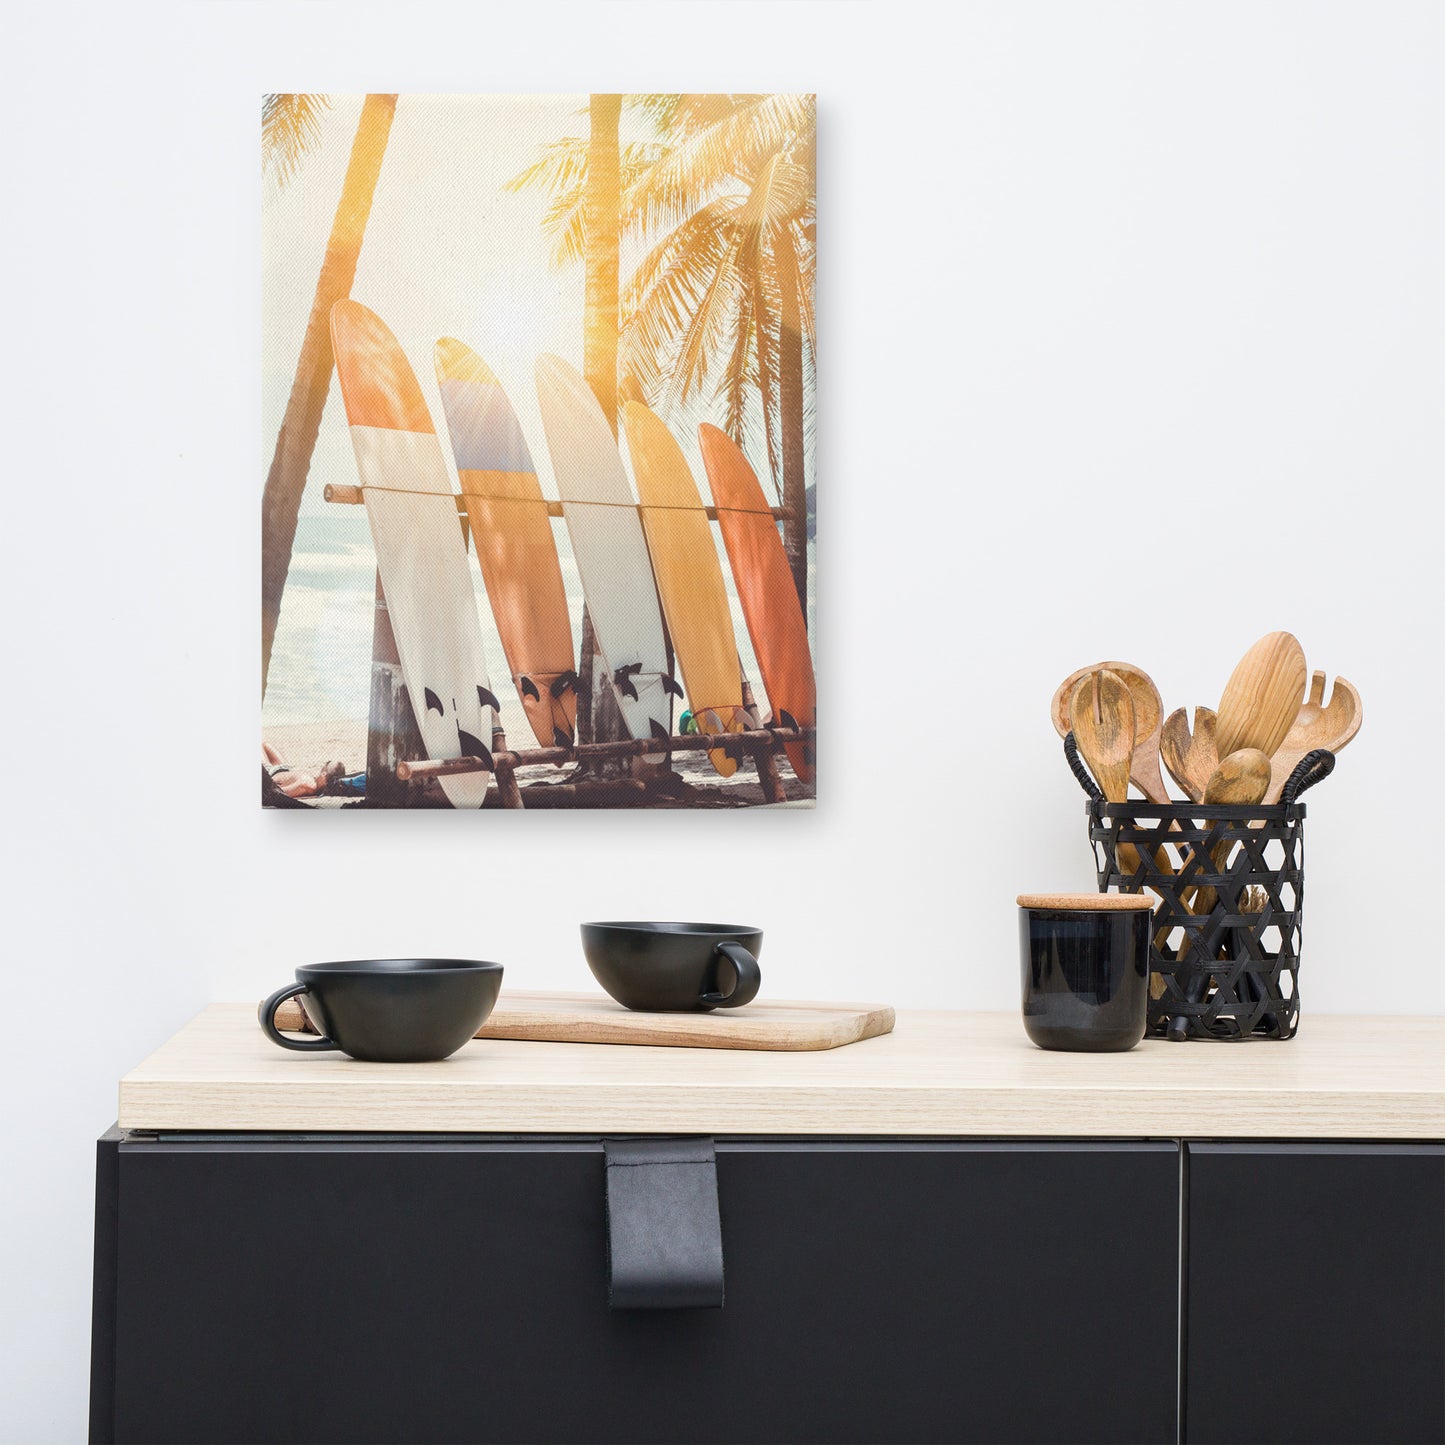 Surfer's Tropical Dreamscape Lifestyle Photograph Canvas Wall Art Print